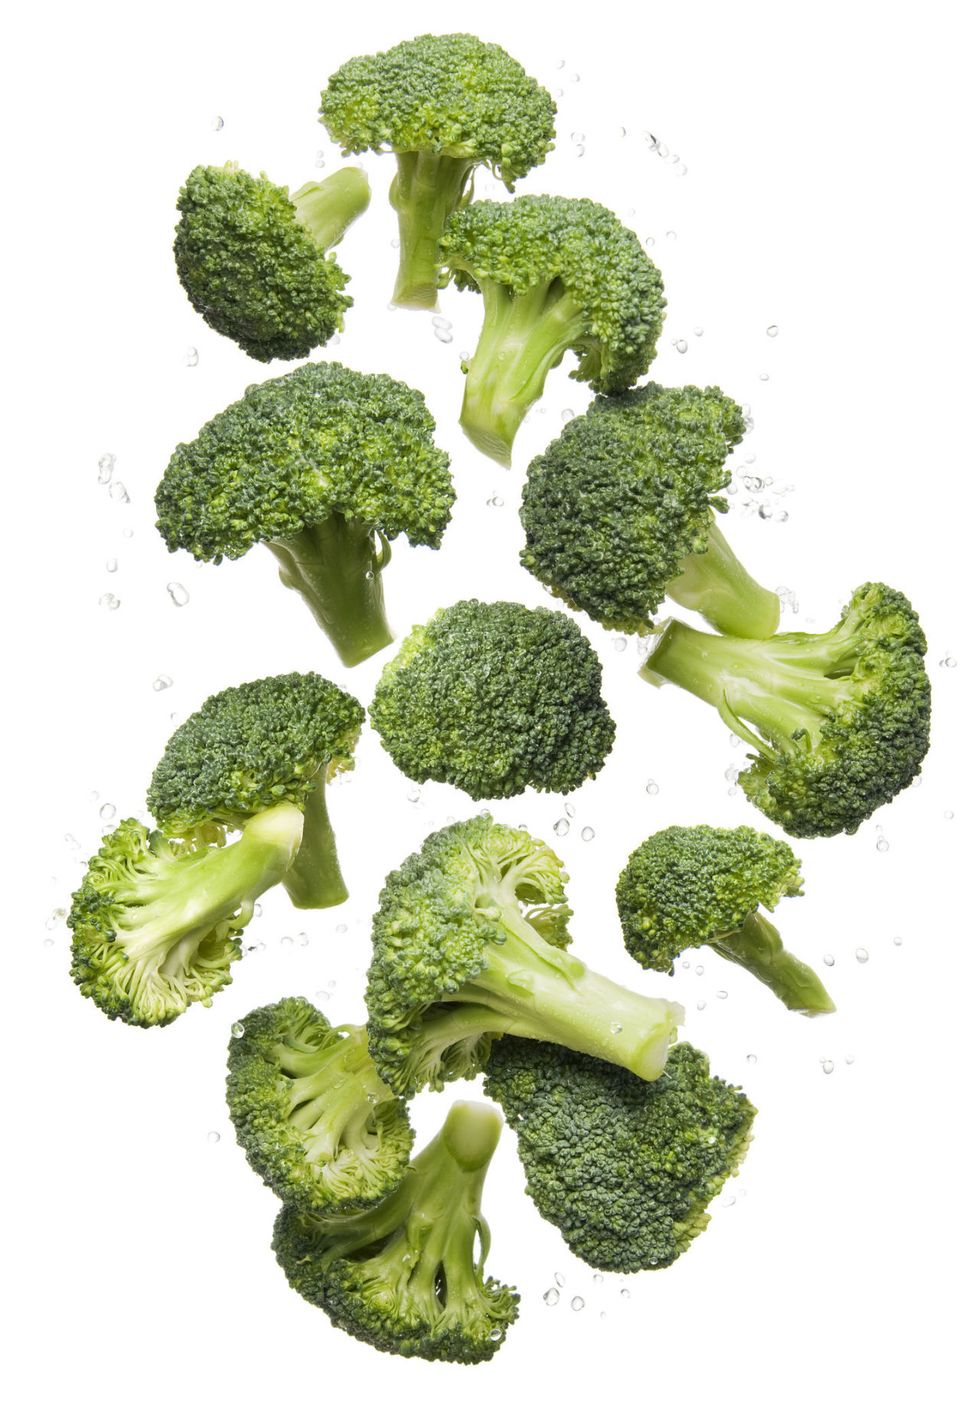 Green, Broccoli, Vegetable, Ingredient, Leaf vegetable, Cruciferous vegetables, Produce, Natural foods, Whole food, wild cabbage, 